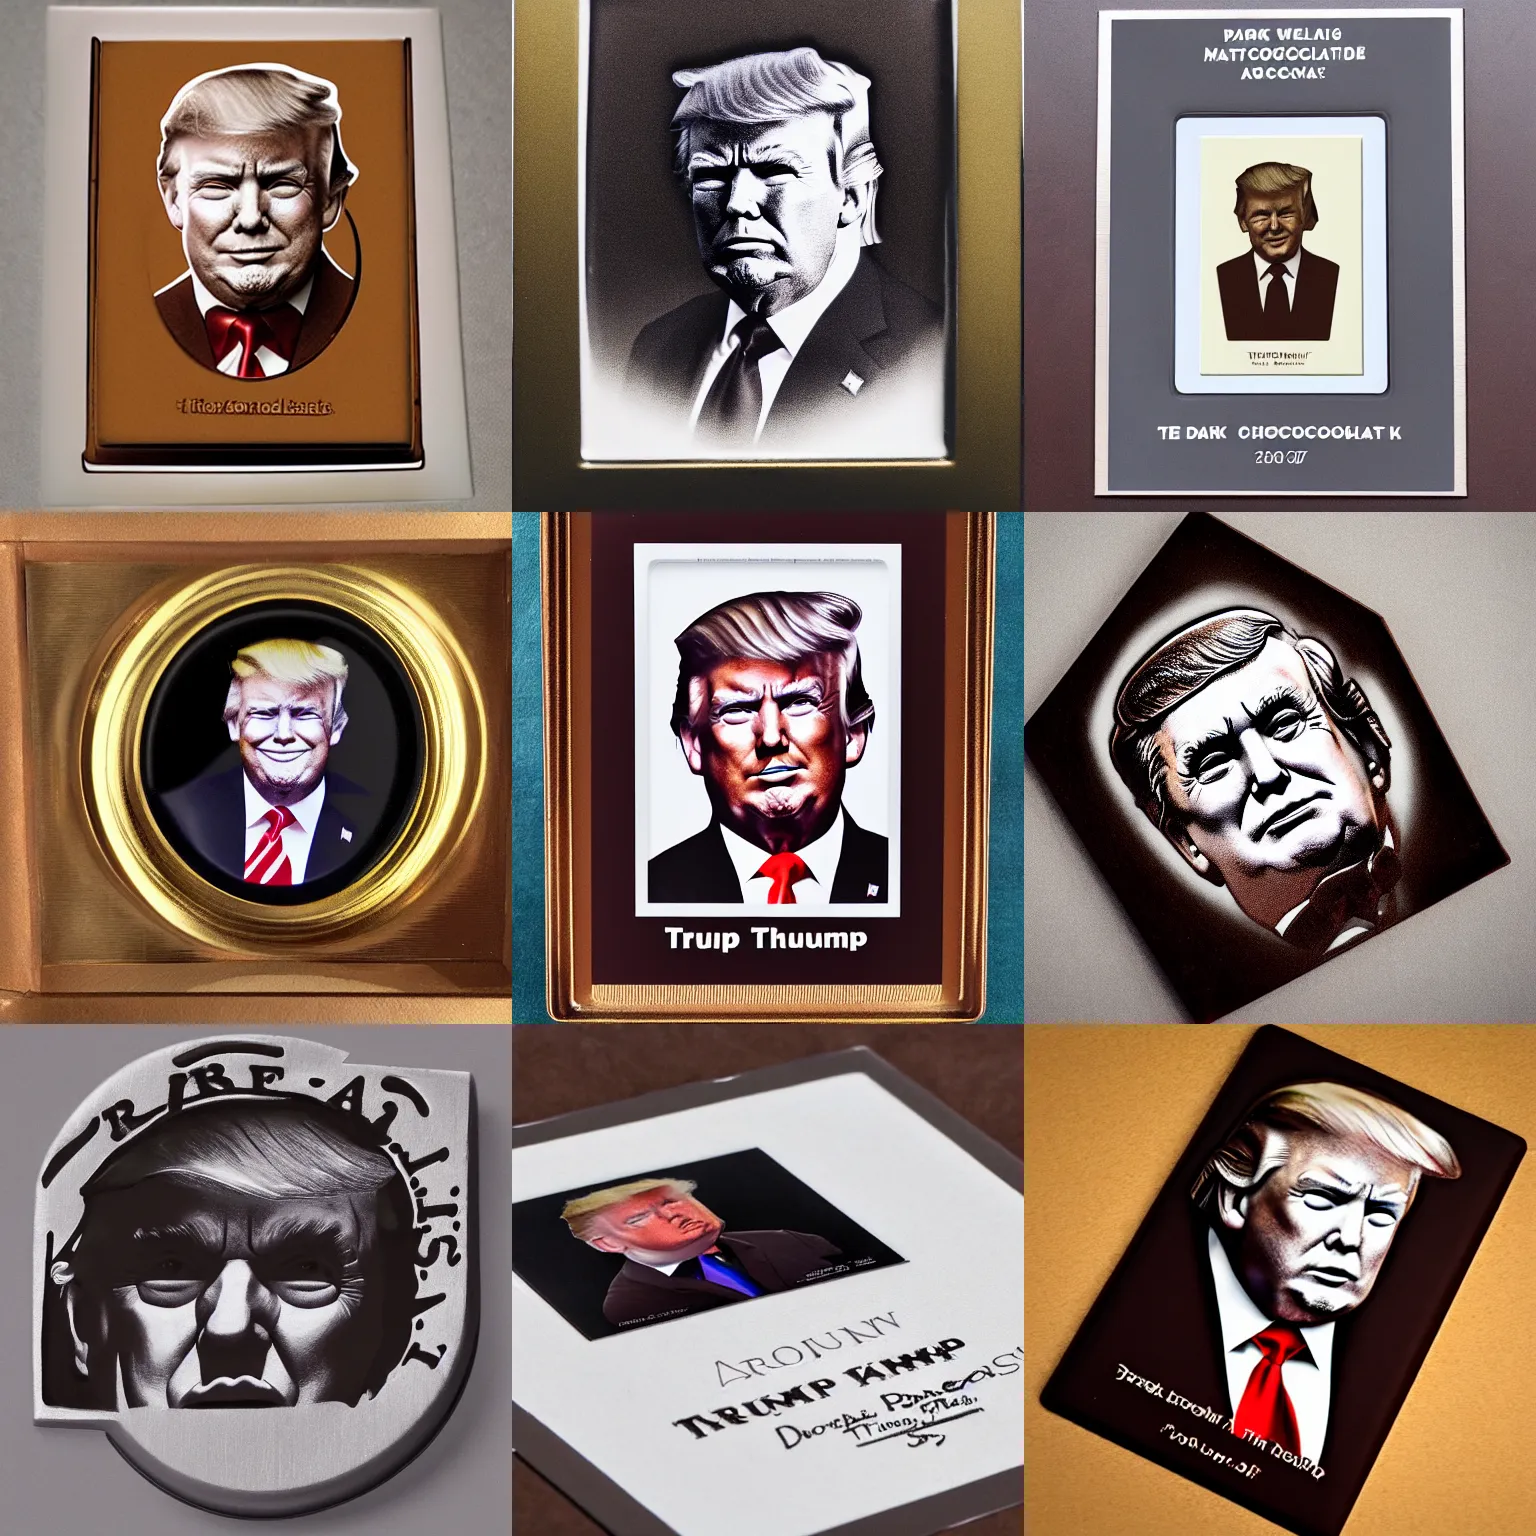 Prompt: dark chocolate engraving portrait of trump